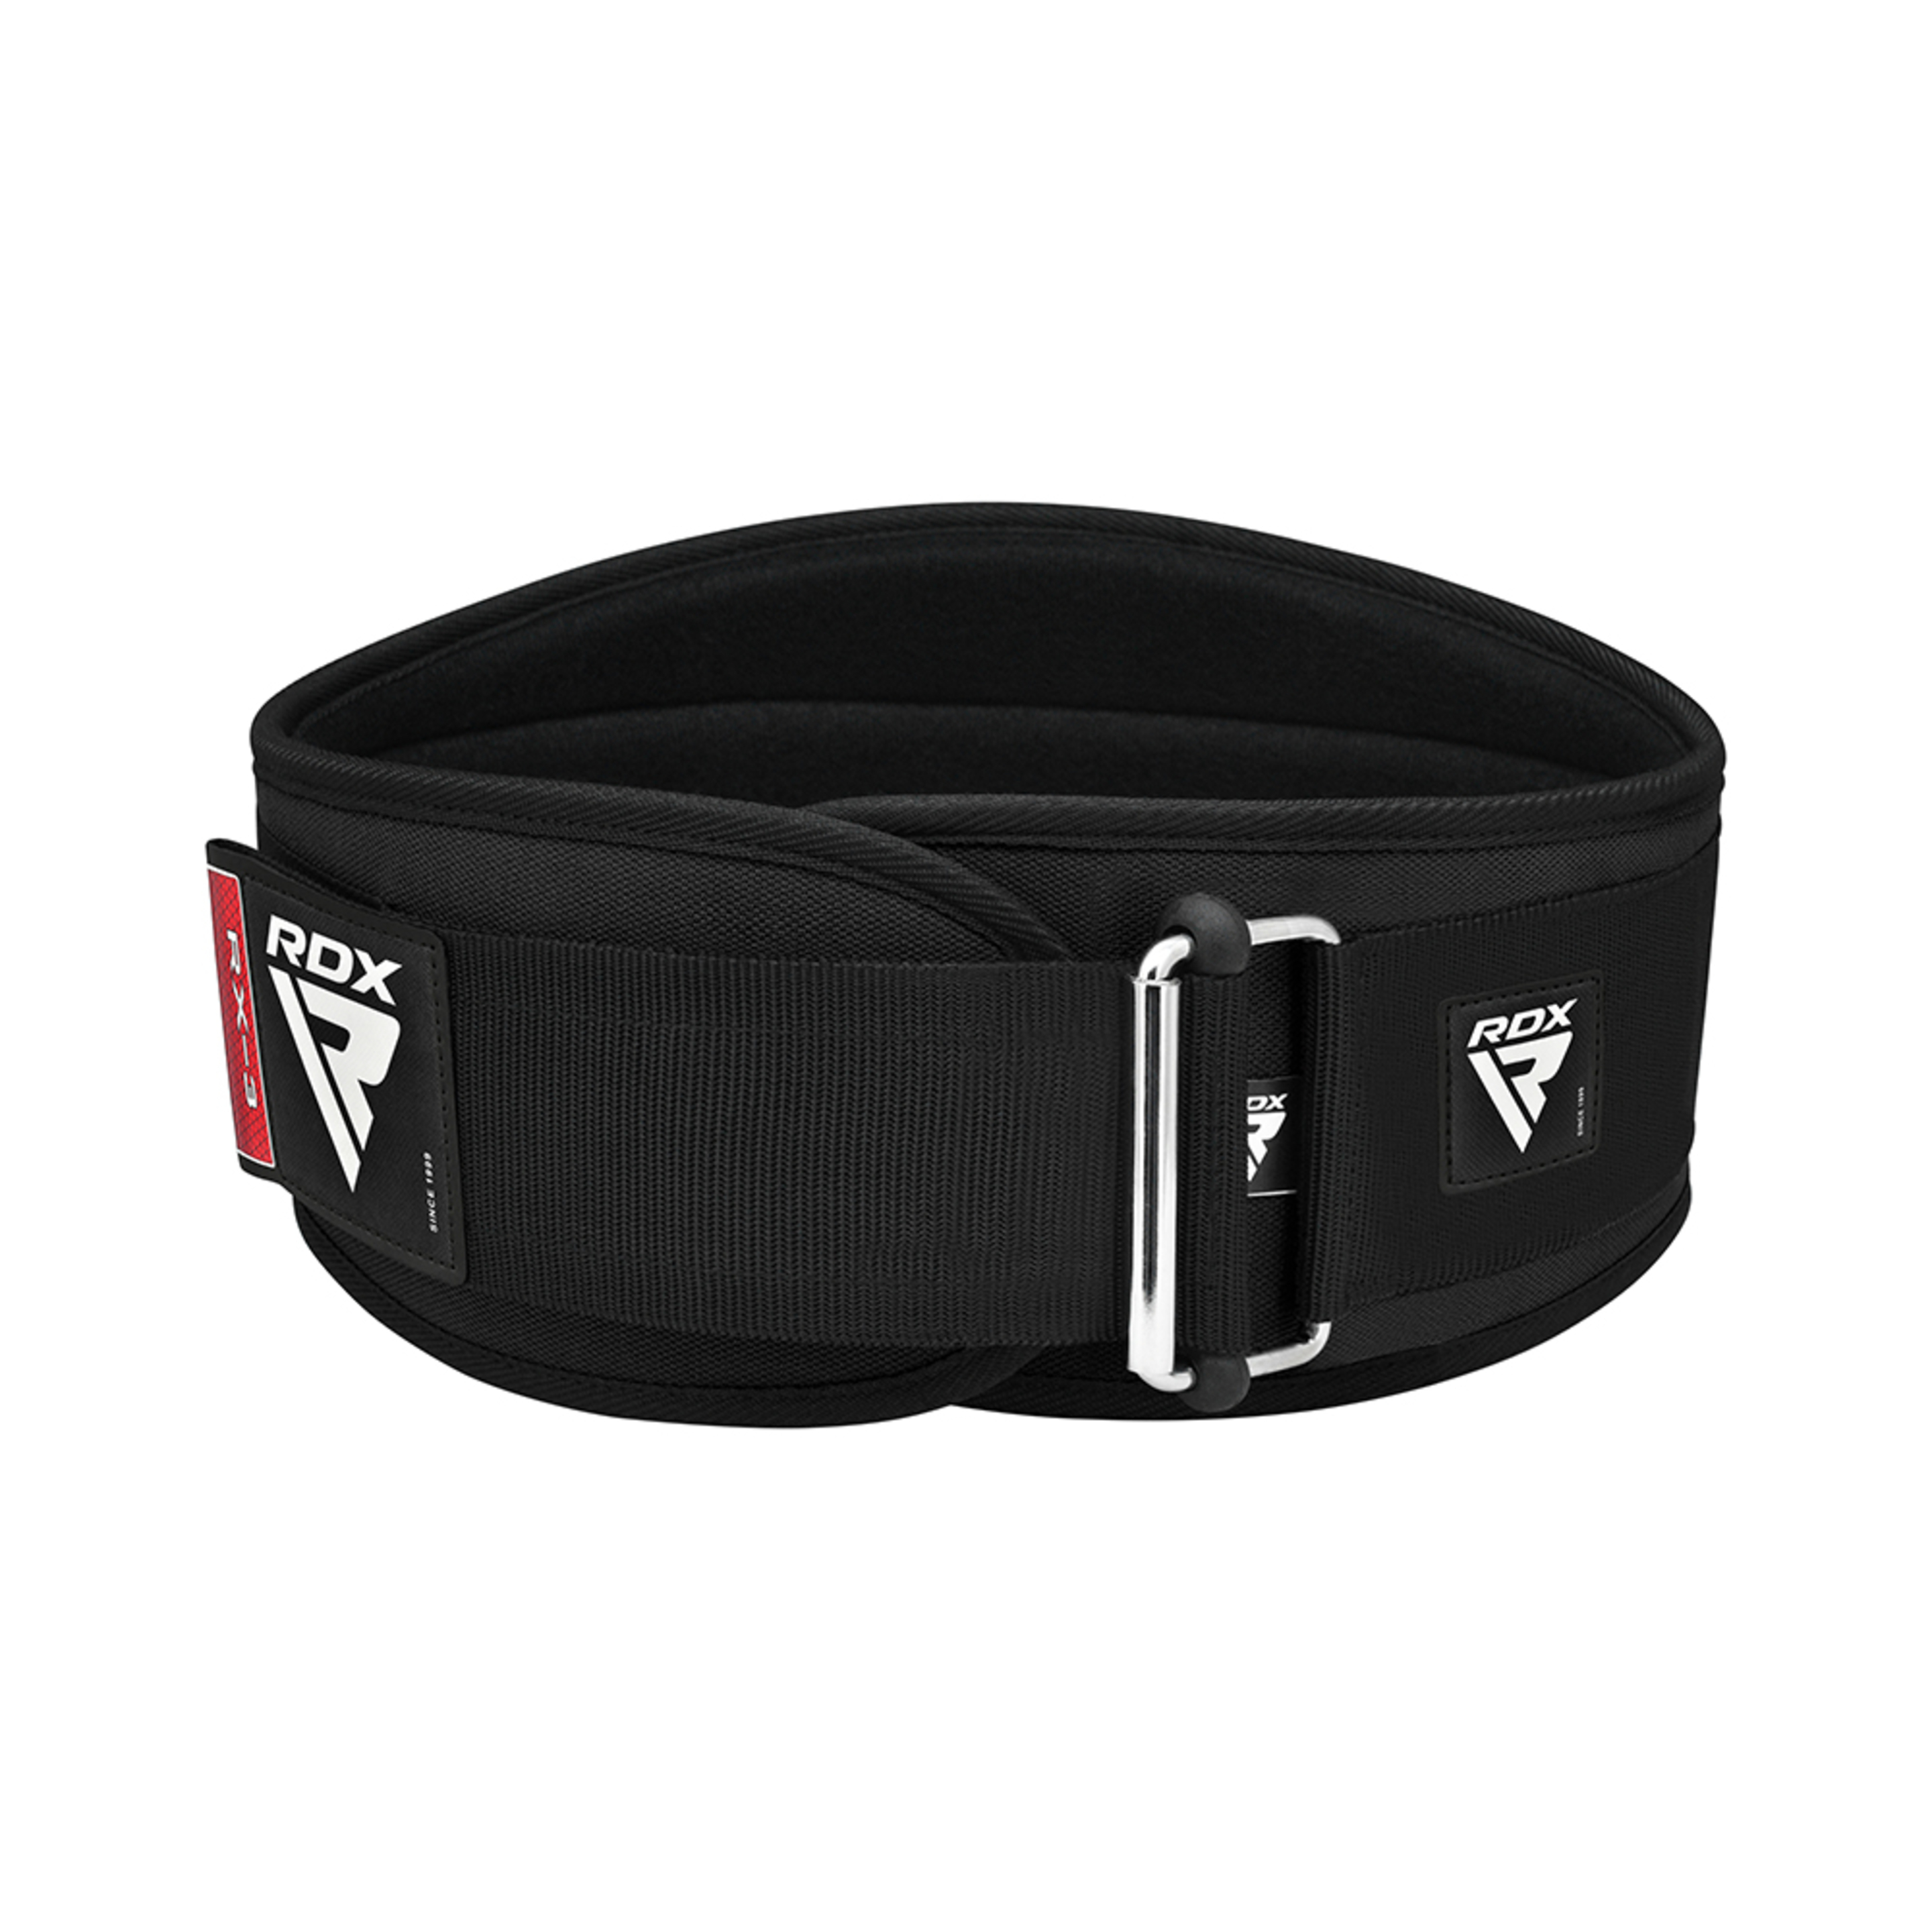 Cinturón De Fitness Rdx Wbe-rx3 - negro - 